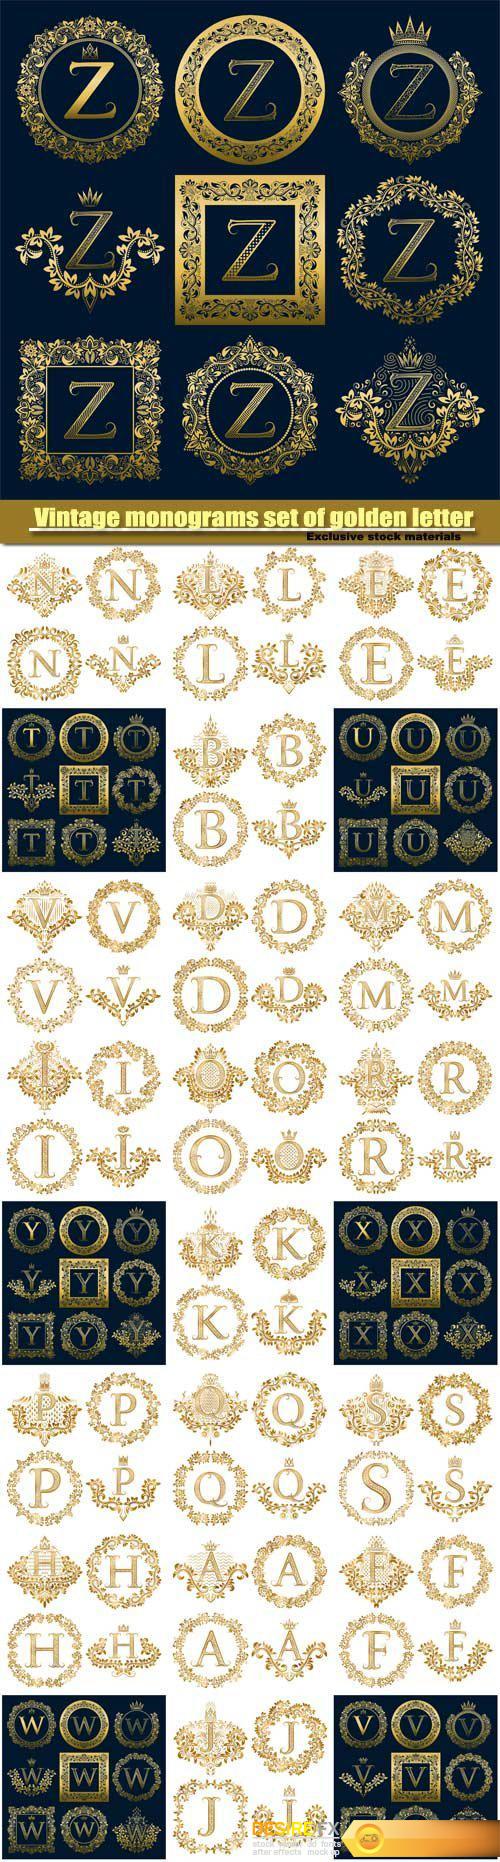 Vintage monograms set of golden letter, heraldic logos